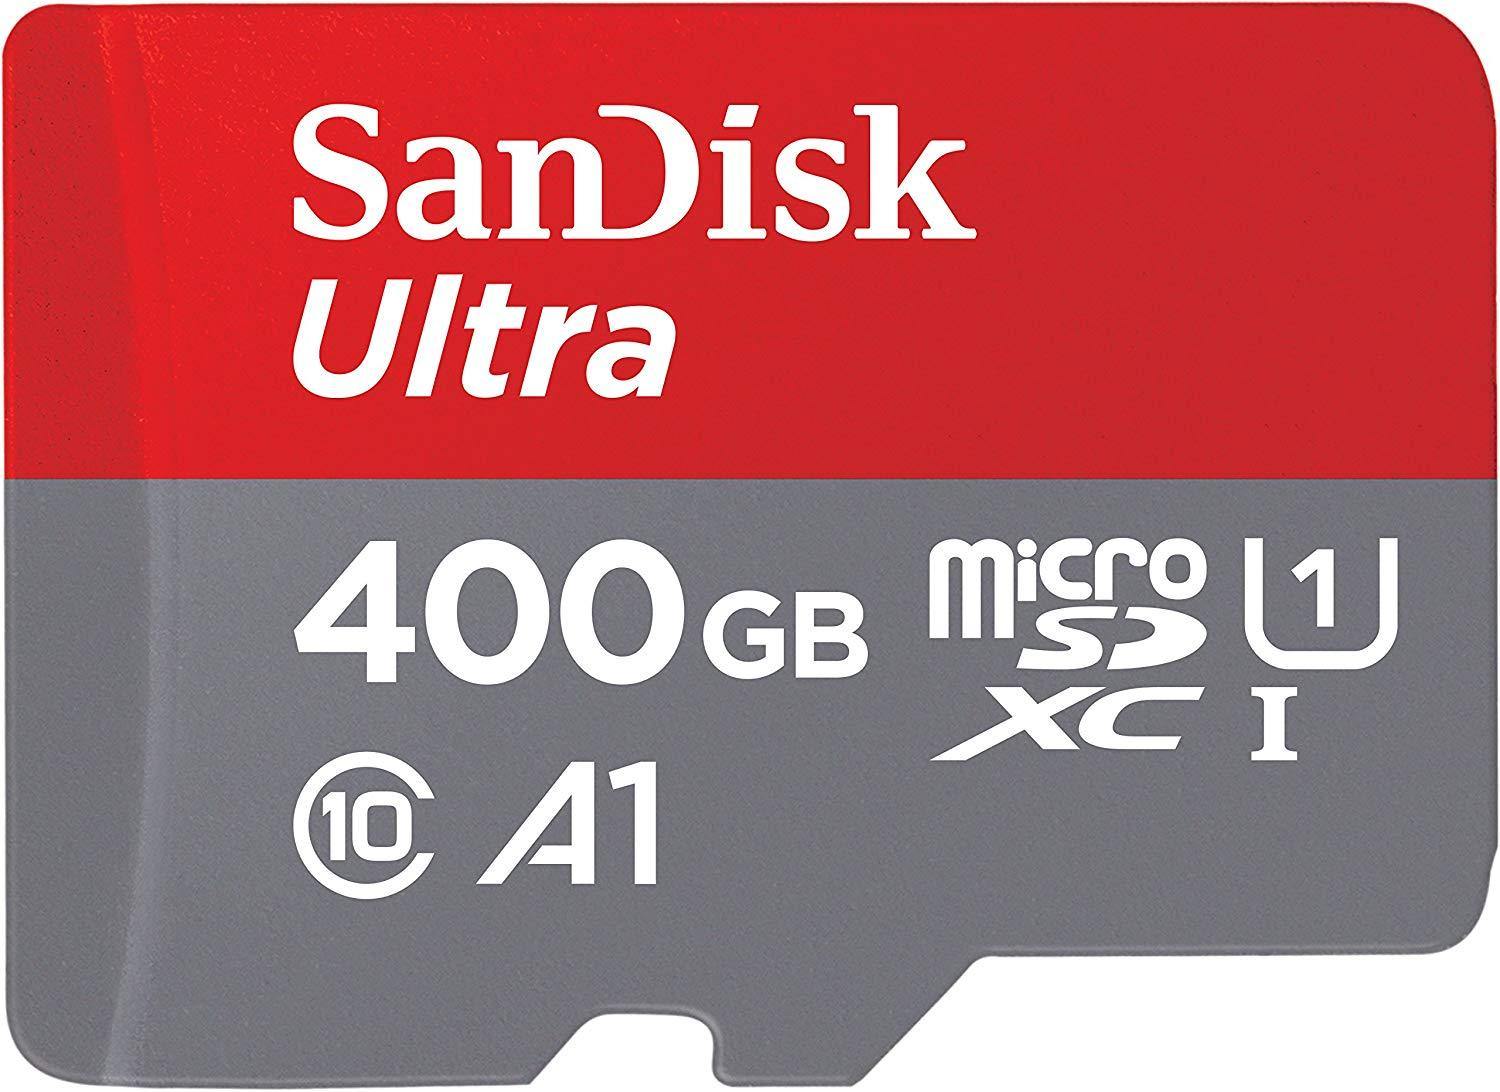 SanDisk Ultra 400GB MicroSD SDHC Memory Card Class 10 Hi-Speed-Memory Cards-dealsplant